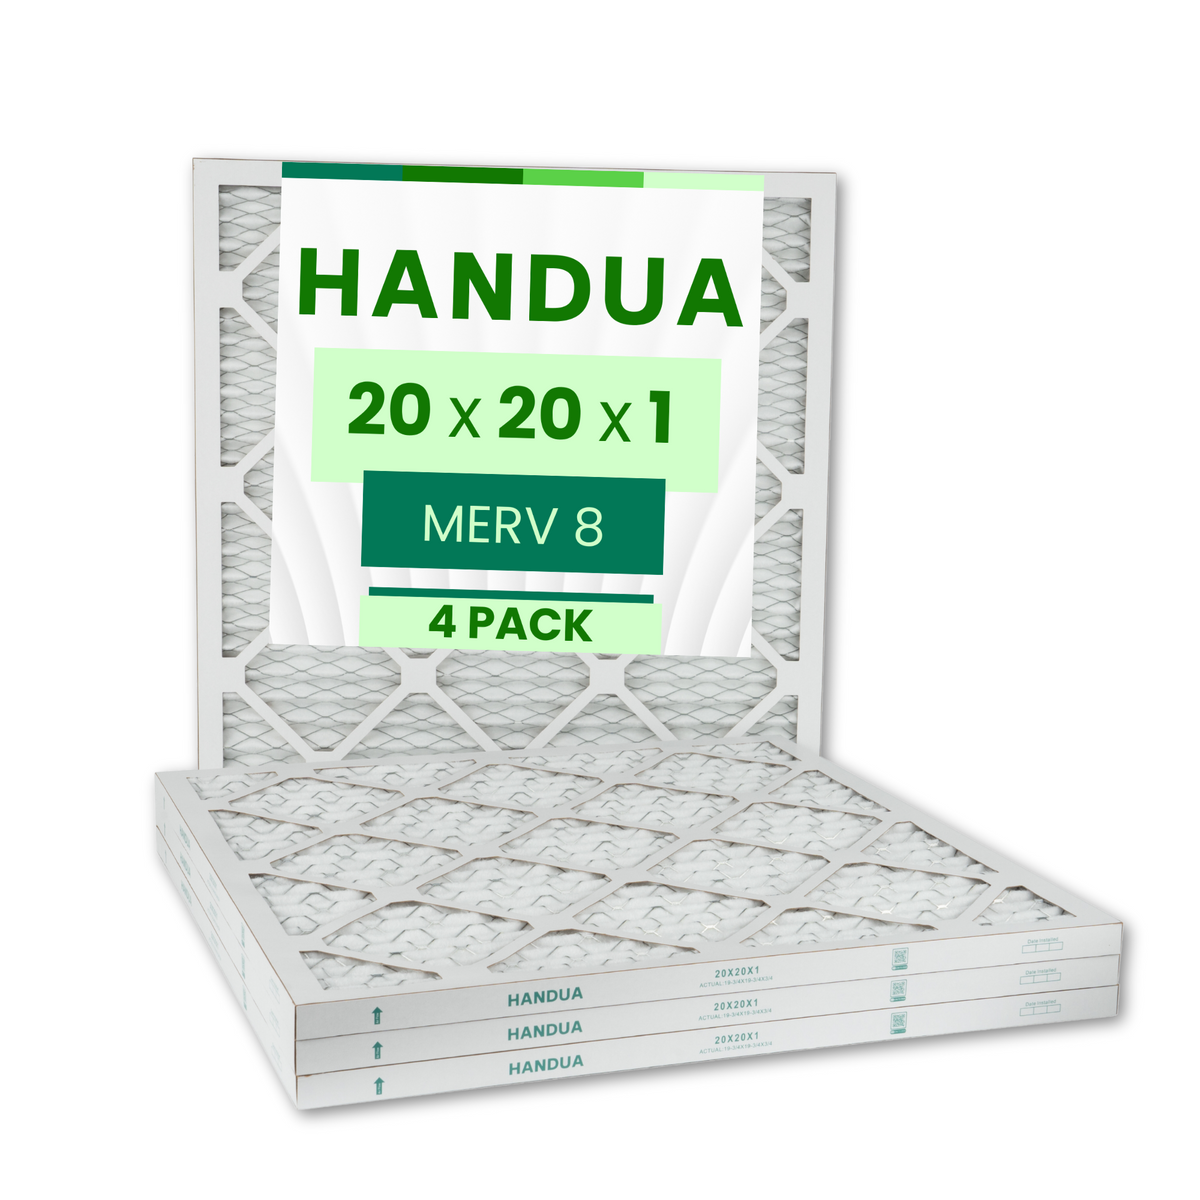 Handua 20x20x1 Air Filter MERV 8 Dust Control, Plated Furnace AC Air Replacement Filter, 4 Pack (Actual Size: 19.75" x 19.75" x 0.75")